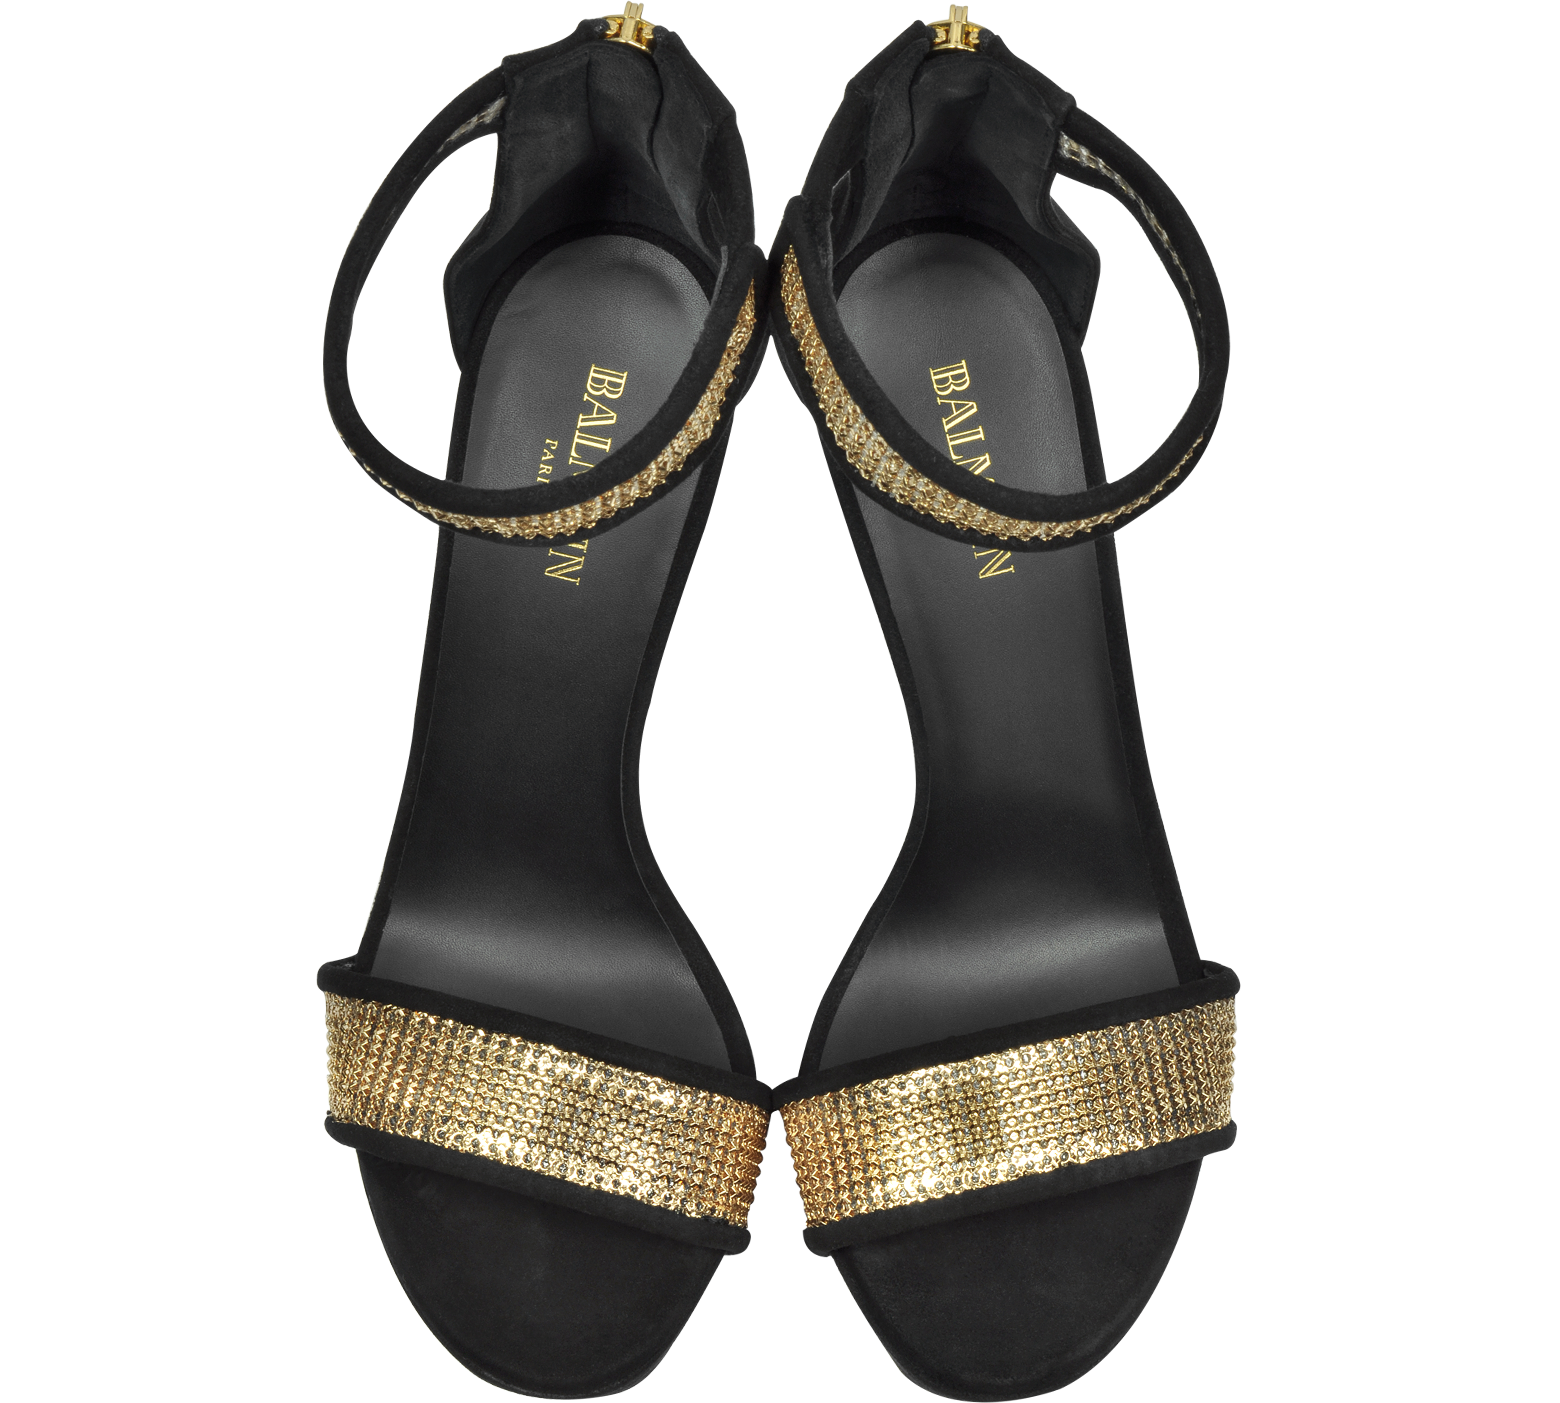 Balmain Samara Golden Mesh and Black Suede Wedge Sandals 36 FR at FORZIERI